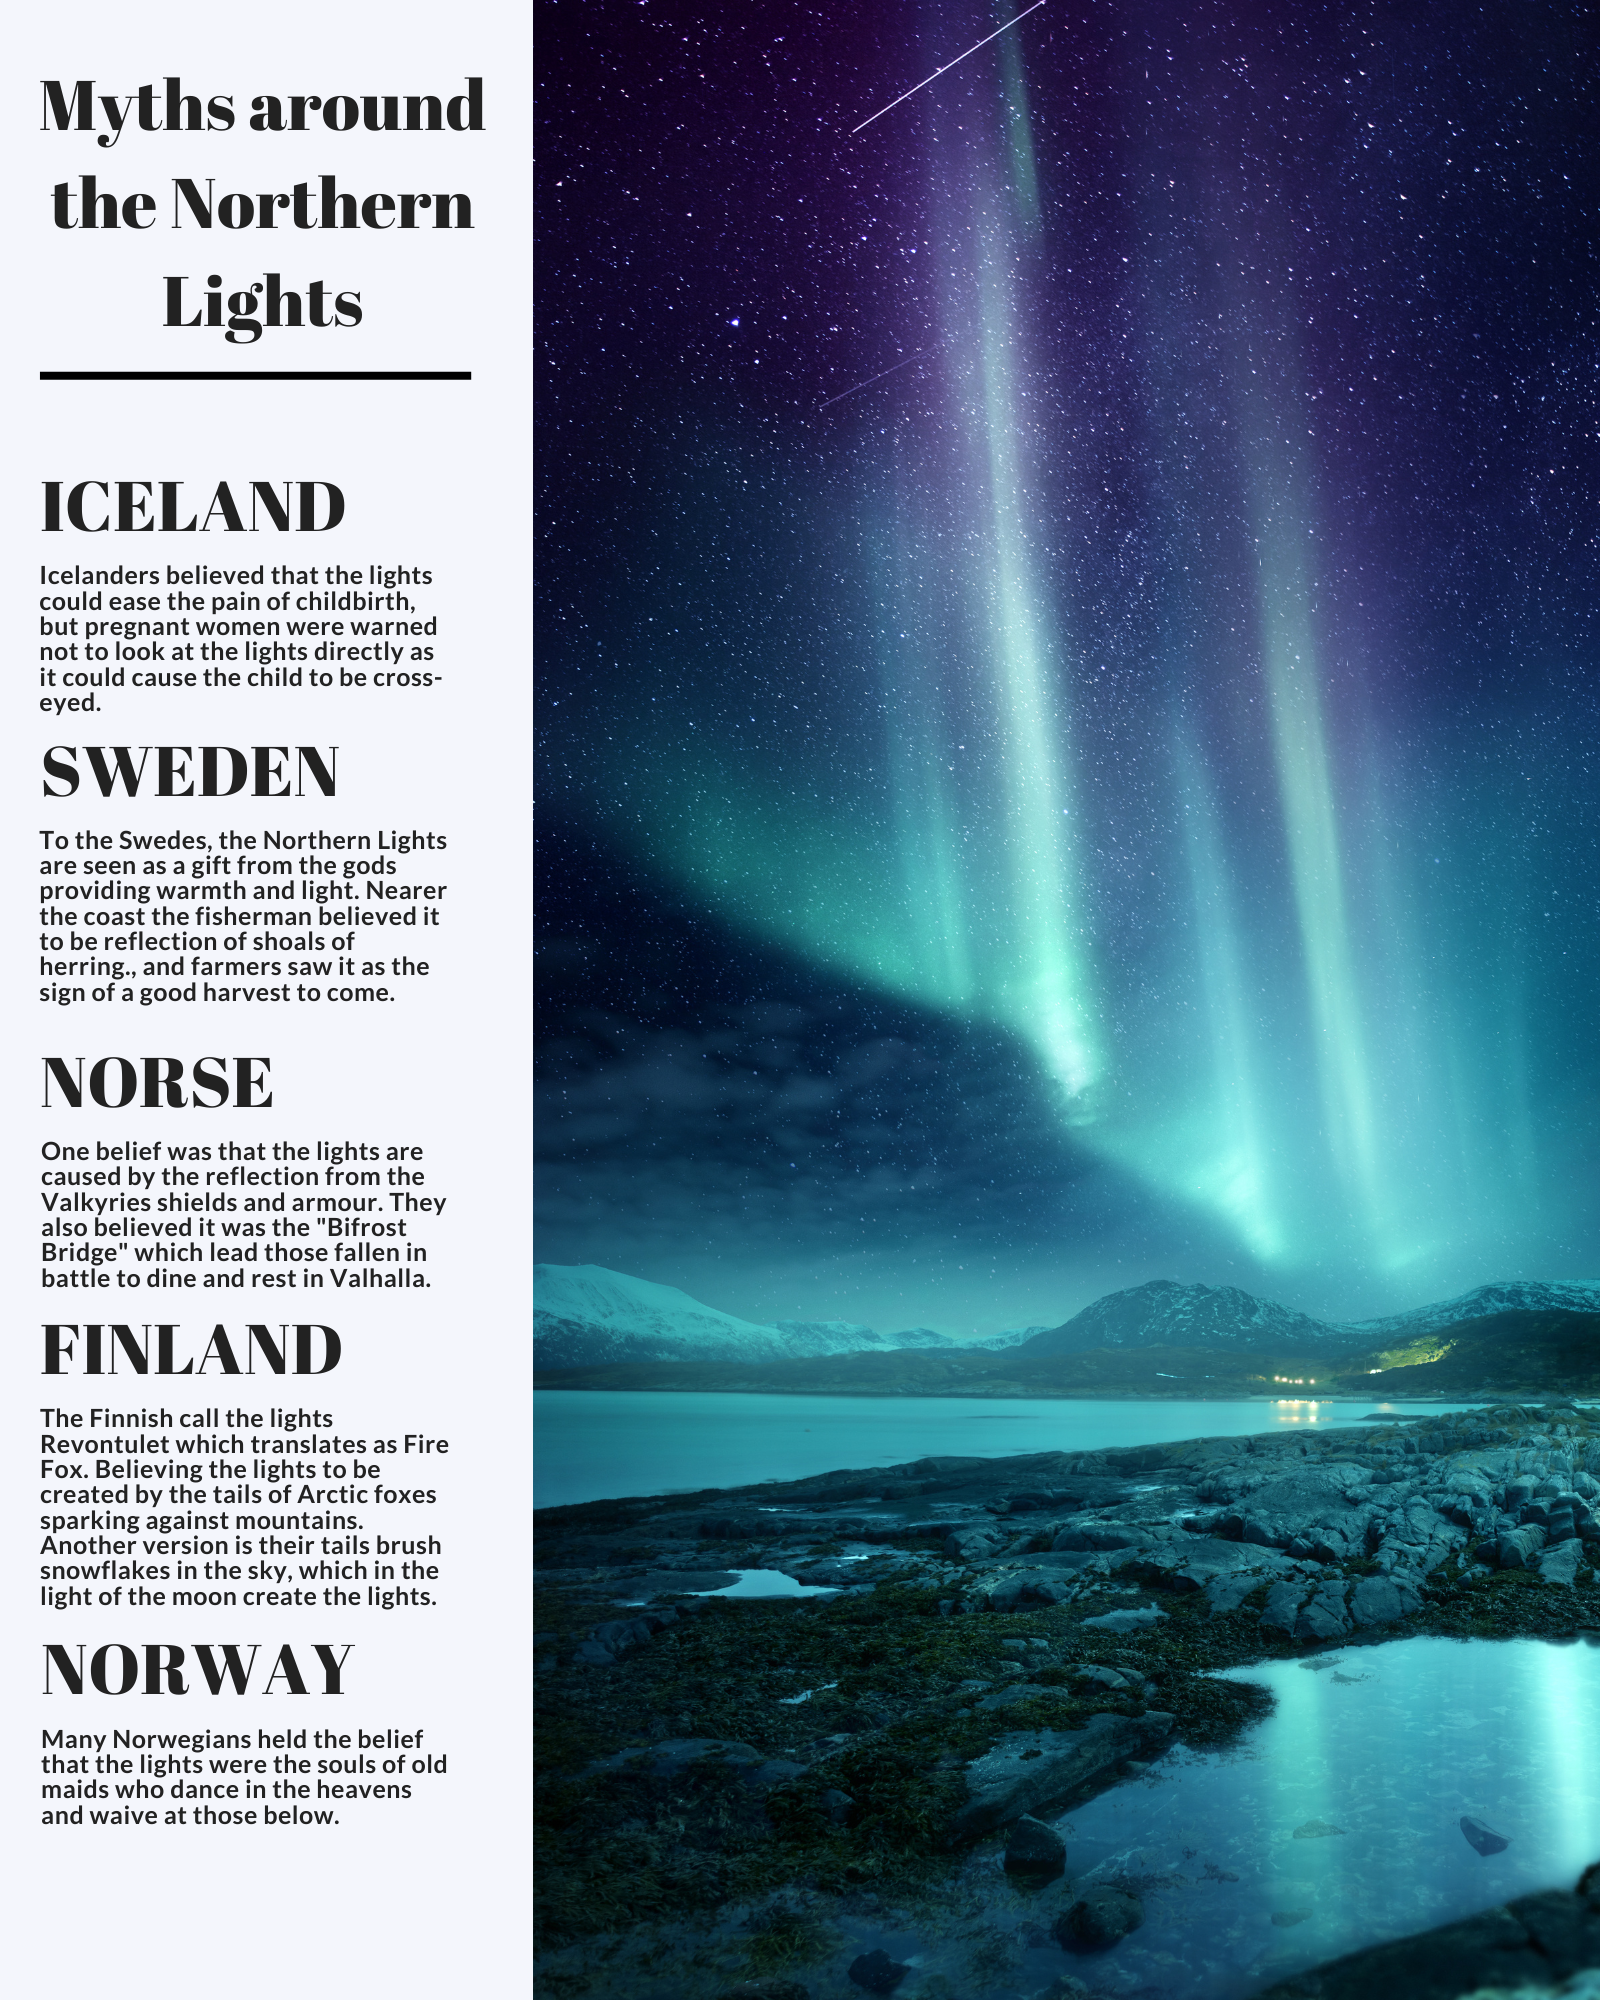 Myths around the Northern Lights